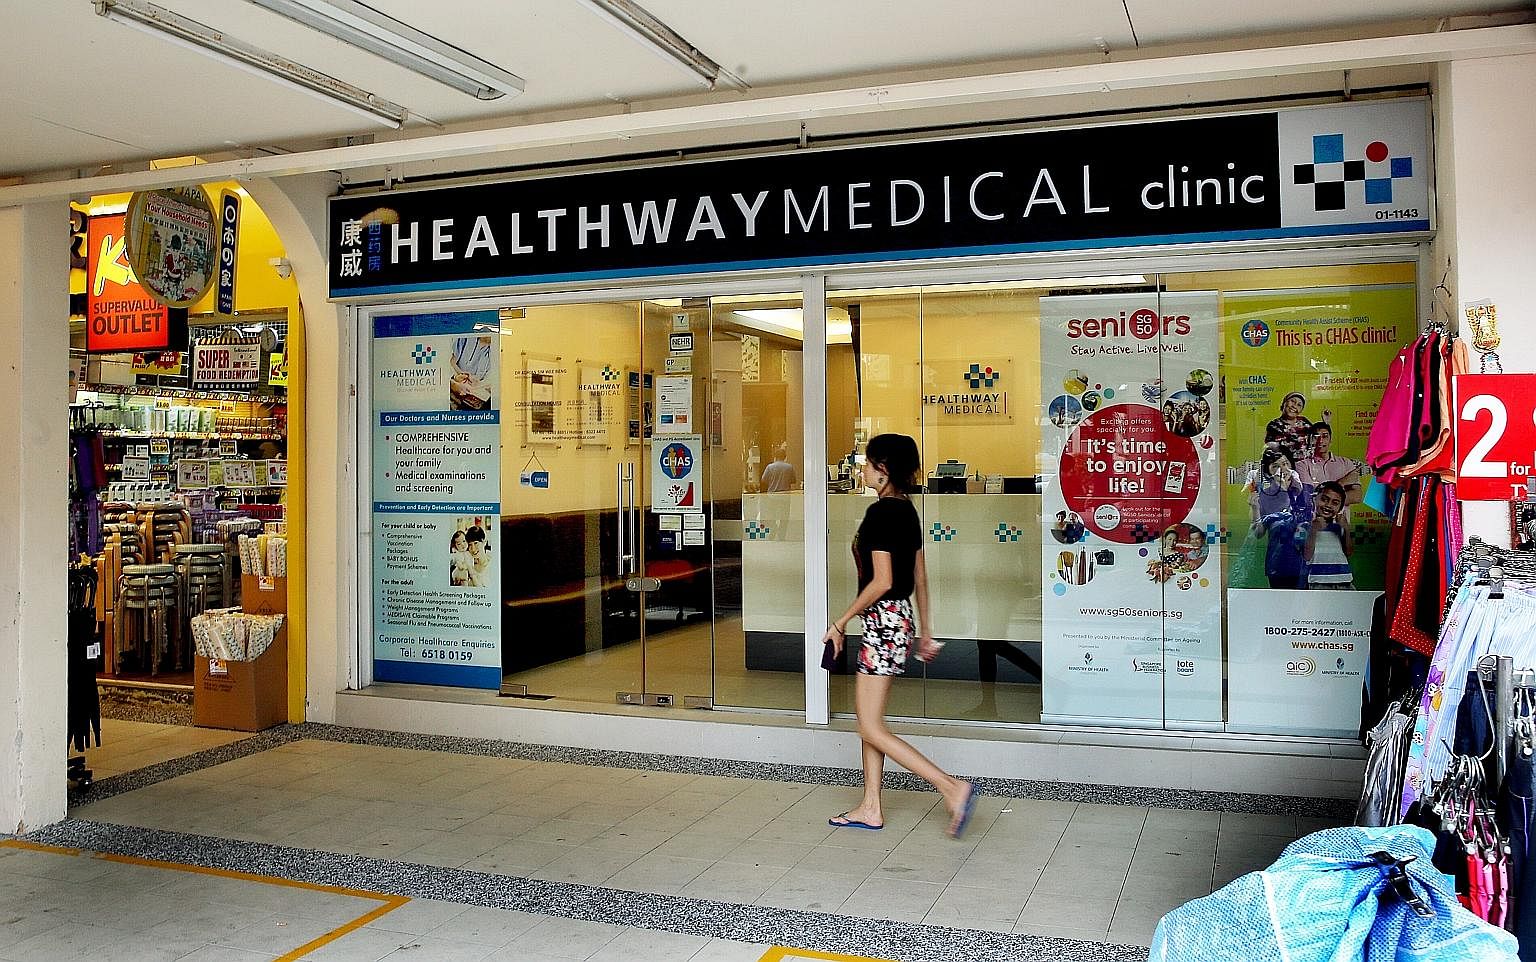 Jozpictsiqf7u 画像をダウンロード Healthway Medical Jurong West Central 2855 Healthway Medical Jurong West Central